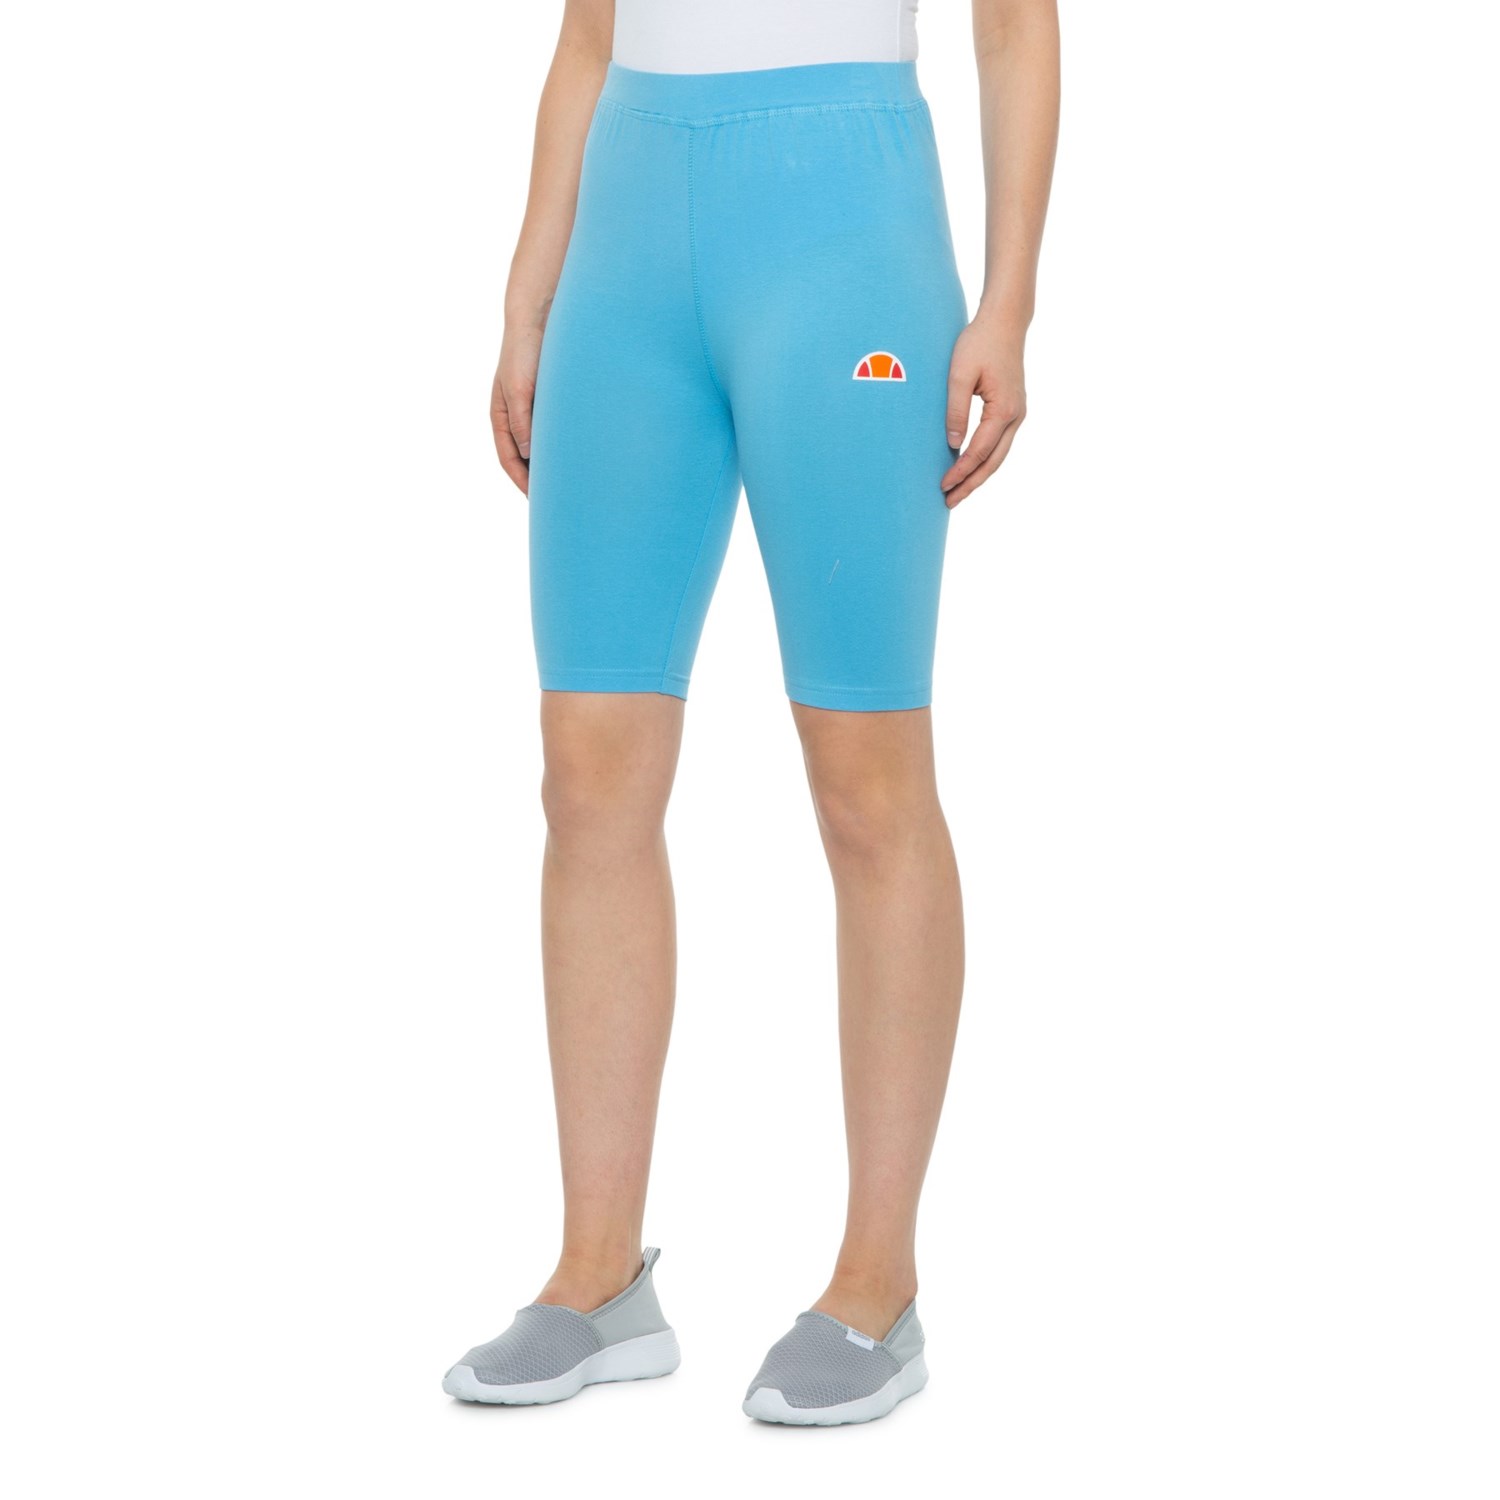 Ellesse Women's Tour Cycle Bike Shorts, Light Blue, XS